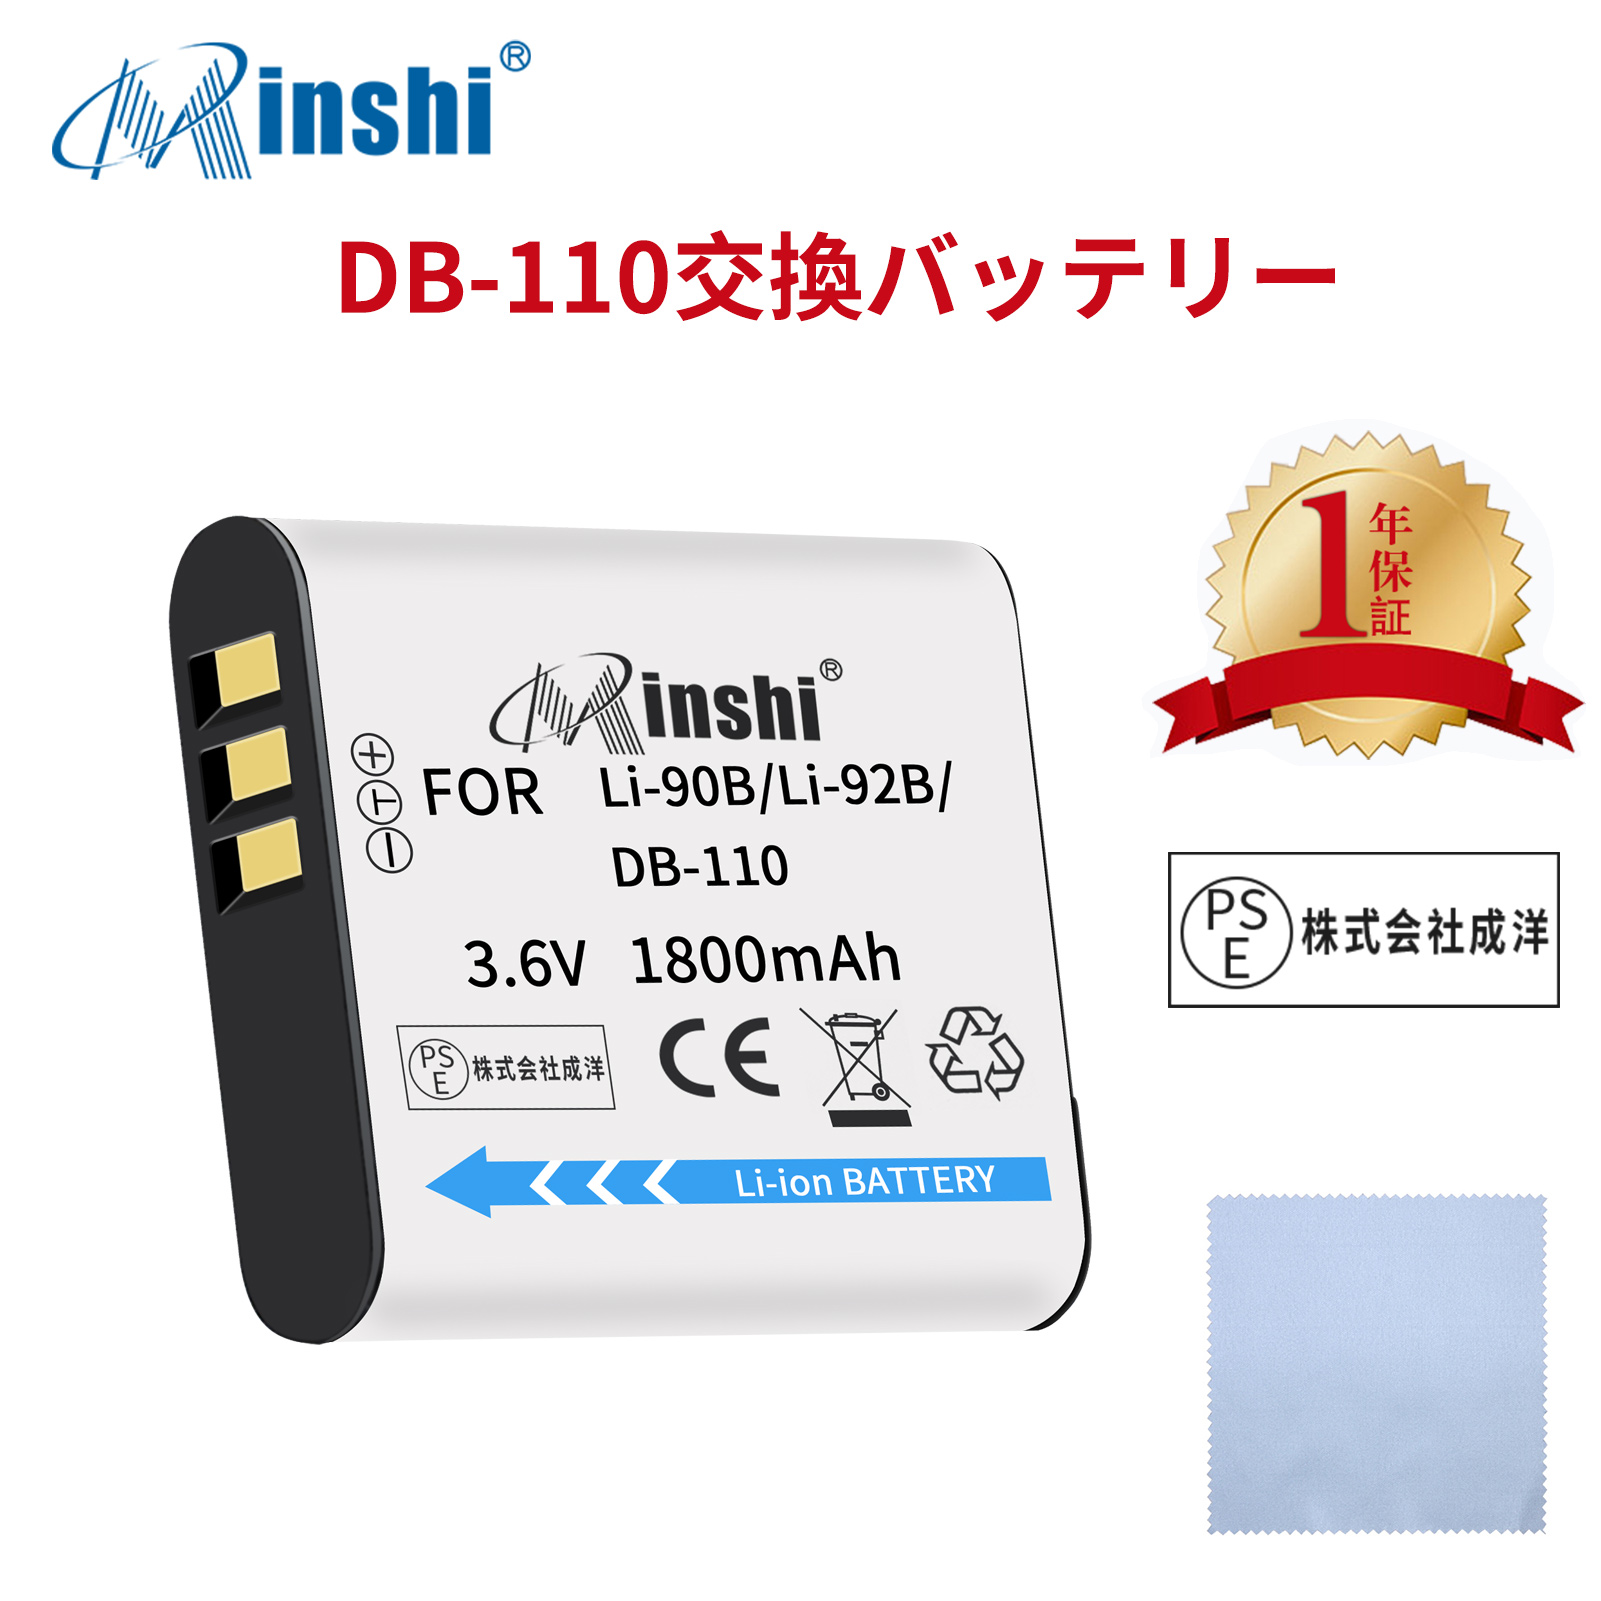 【清潔布ー付】minshi OLYMPUS LI-90B  LI-90B【1800mAh 3.6V】PSE認定済 高品質 LI-92B 交換用バッテリー